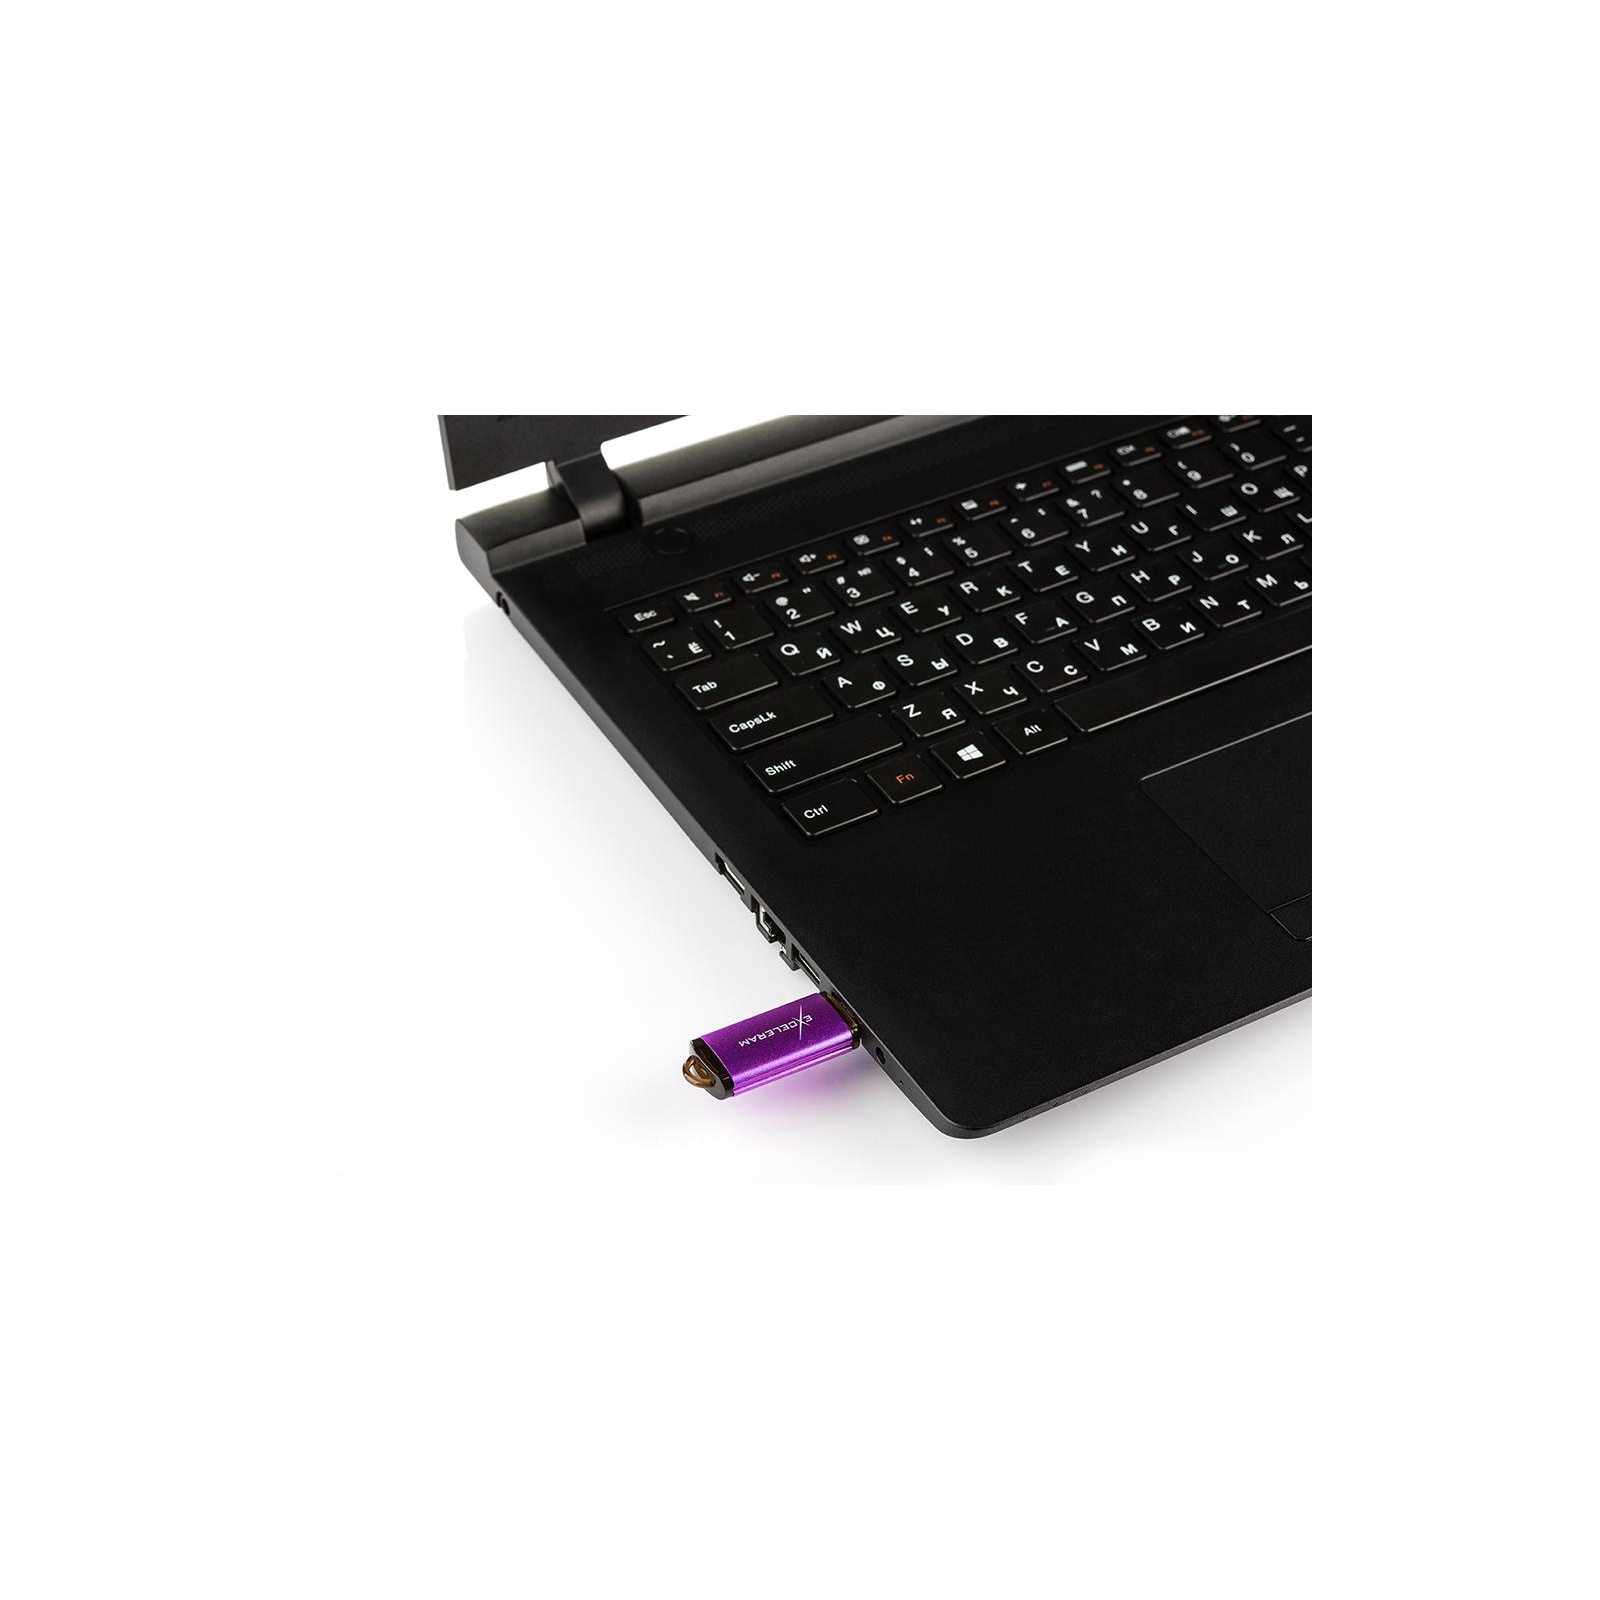 USB флеш накопитель eXceleram 16GB A3 Series Purple USB 3.1 Gen 1 (EXA3U3PU16) изображение 7